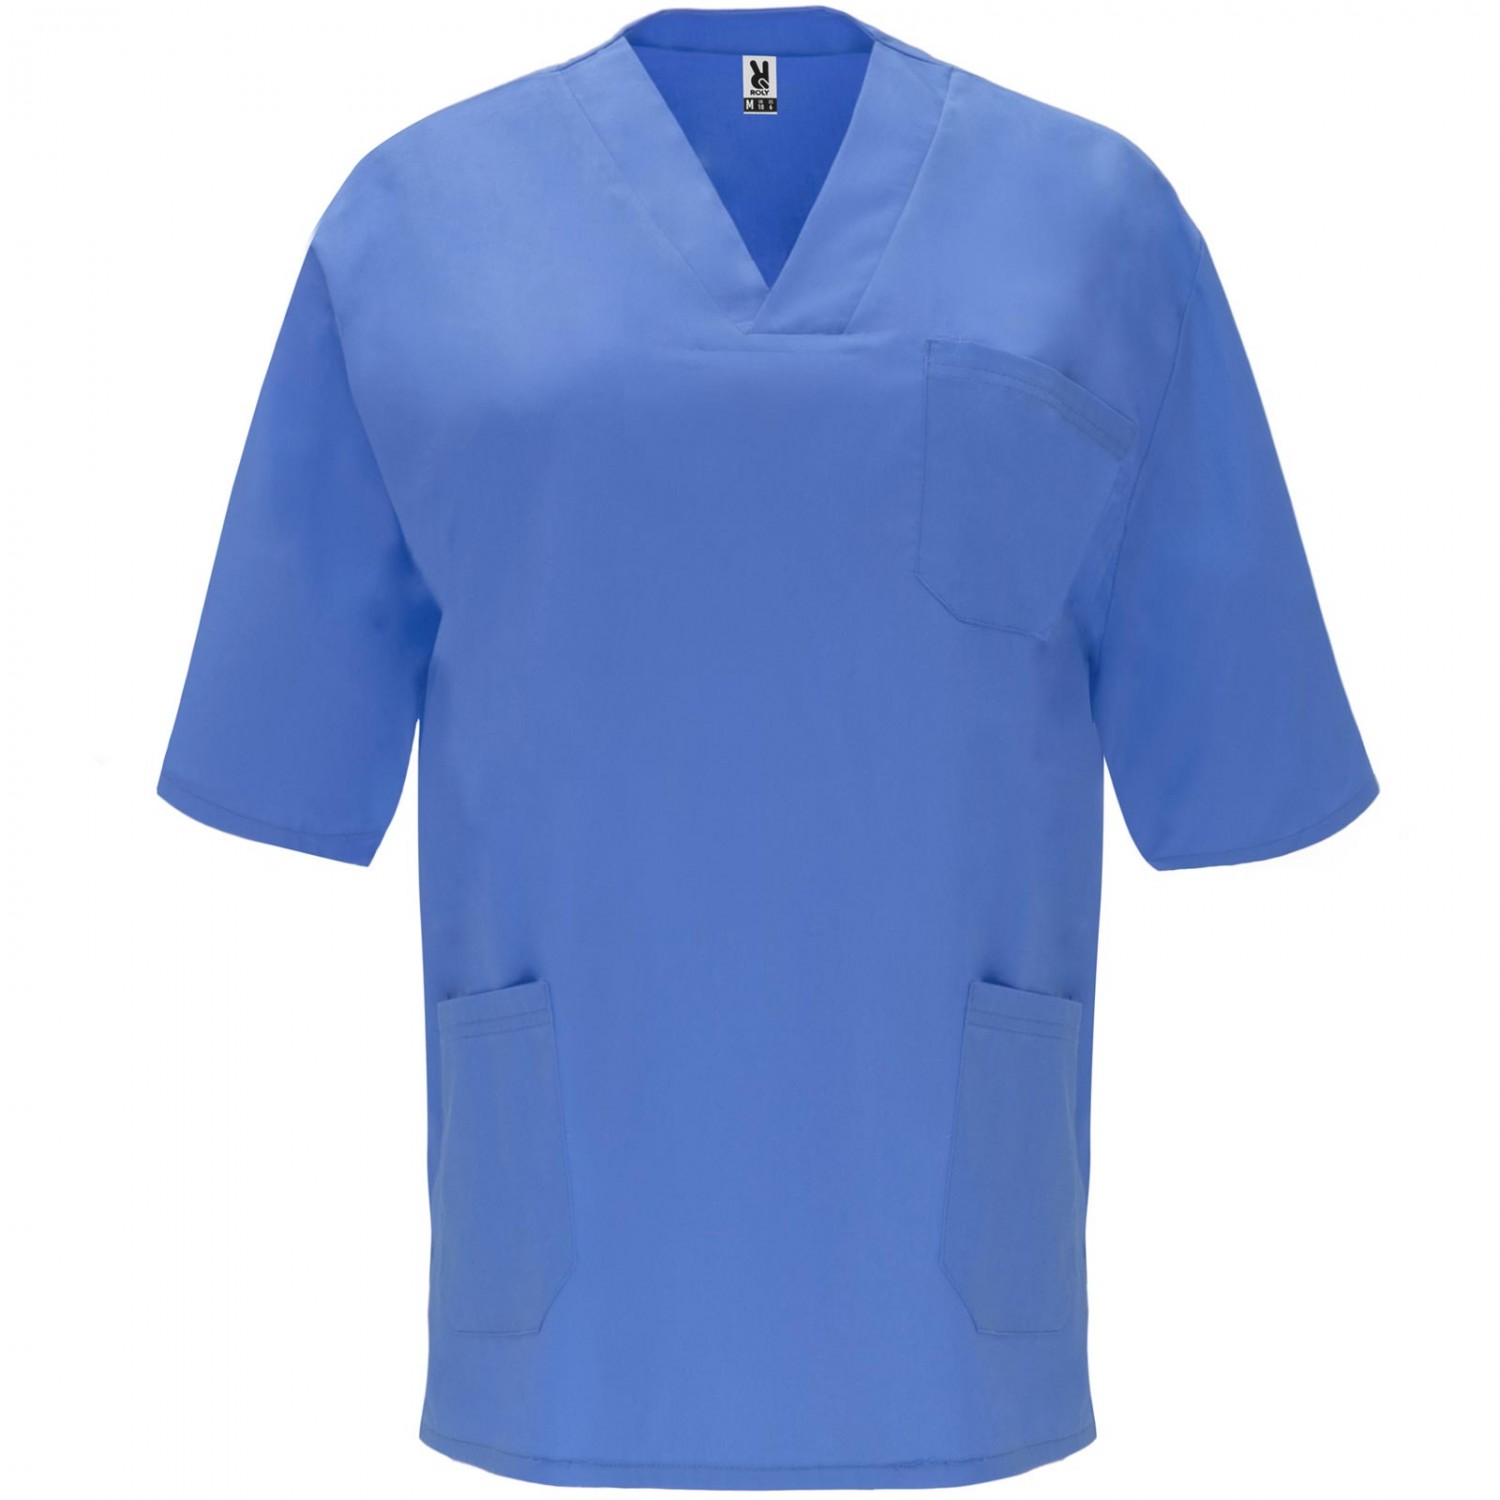 Schlupfkasack Medizin Pflege Unisex Hemd Jacke (Farbe: OP-blau Größe: M)